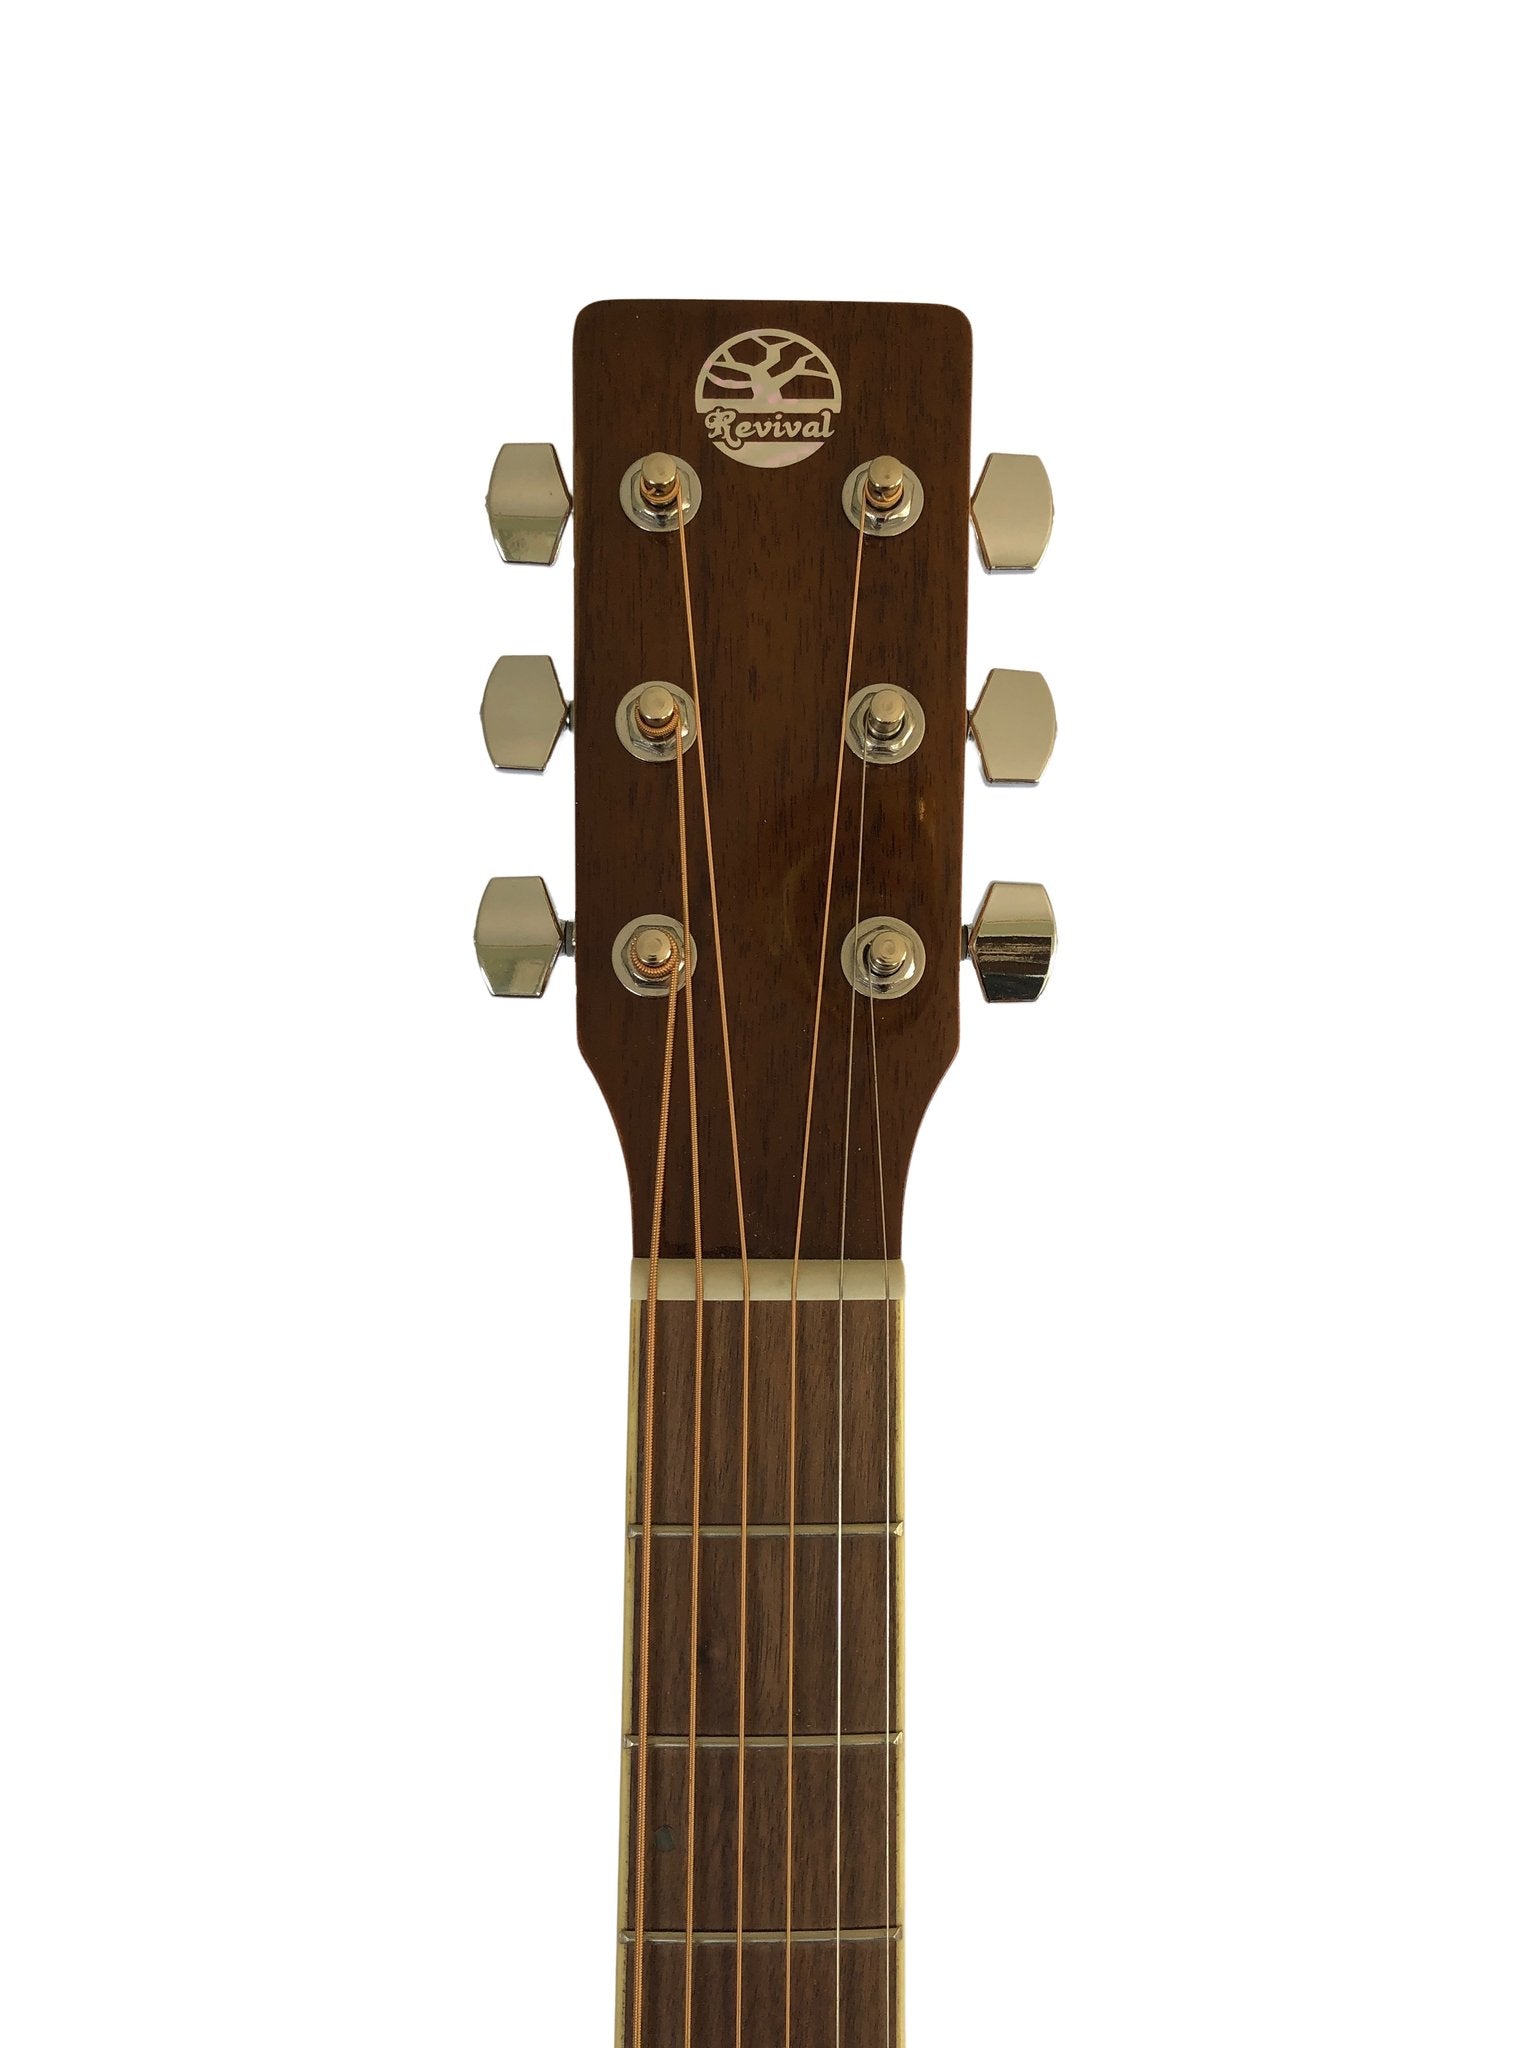 Revival RG-25 Spruce top, Black Walnut Thin Body Guitar Guitars Revival   